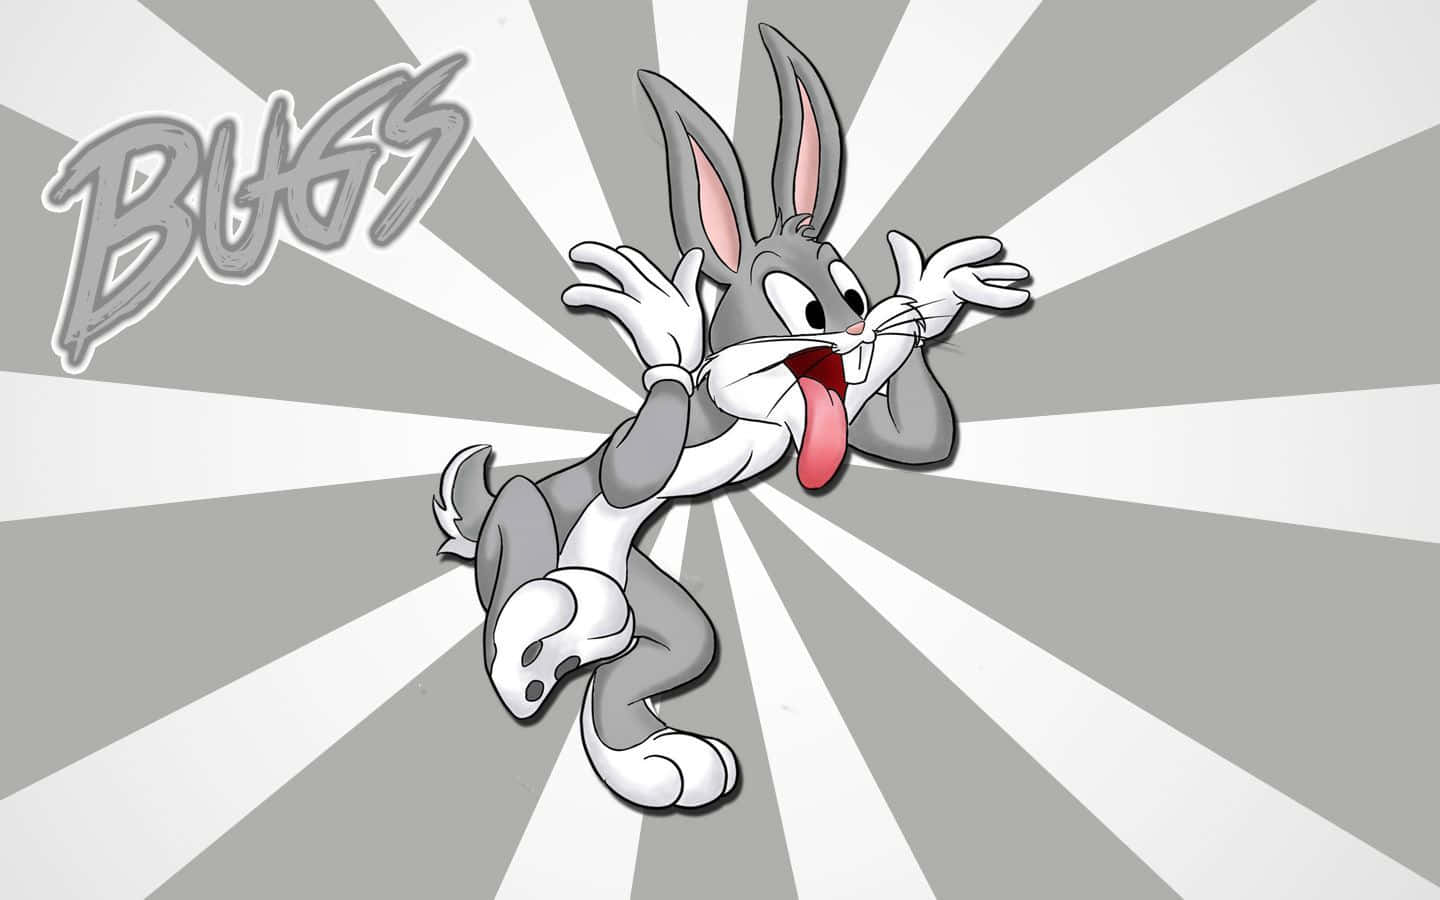 Cool Bugs Bunny 1440 X 900 Wallpaper